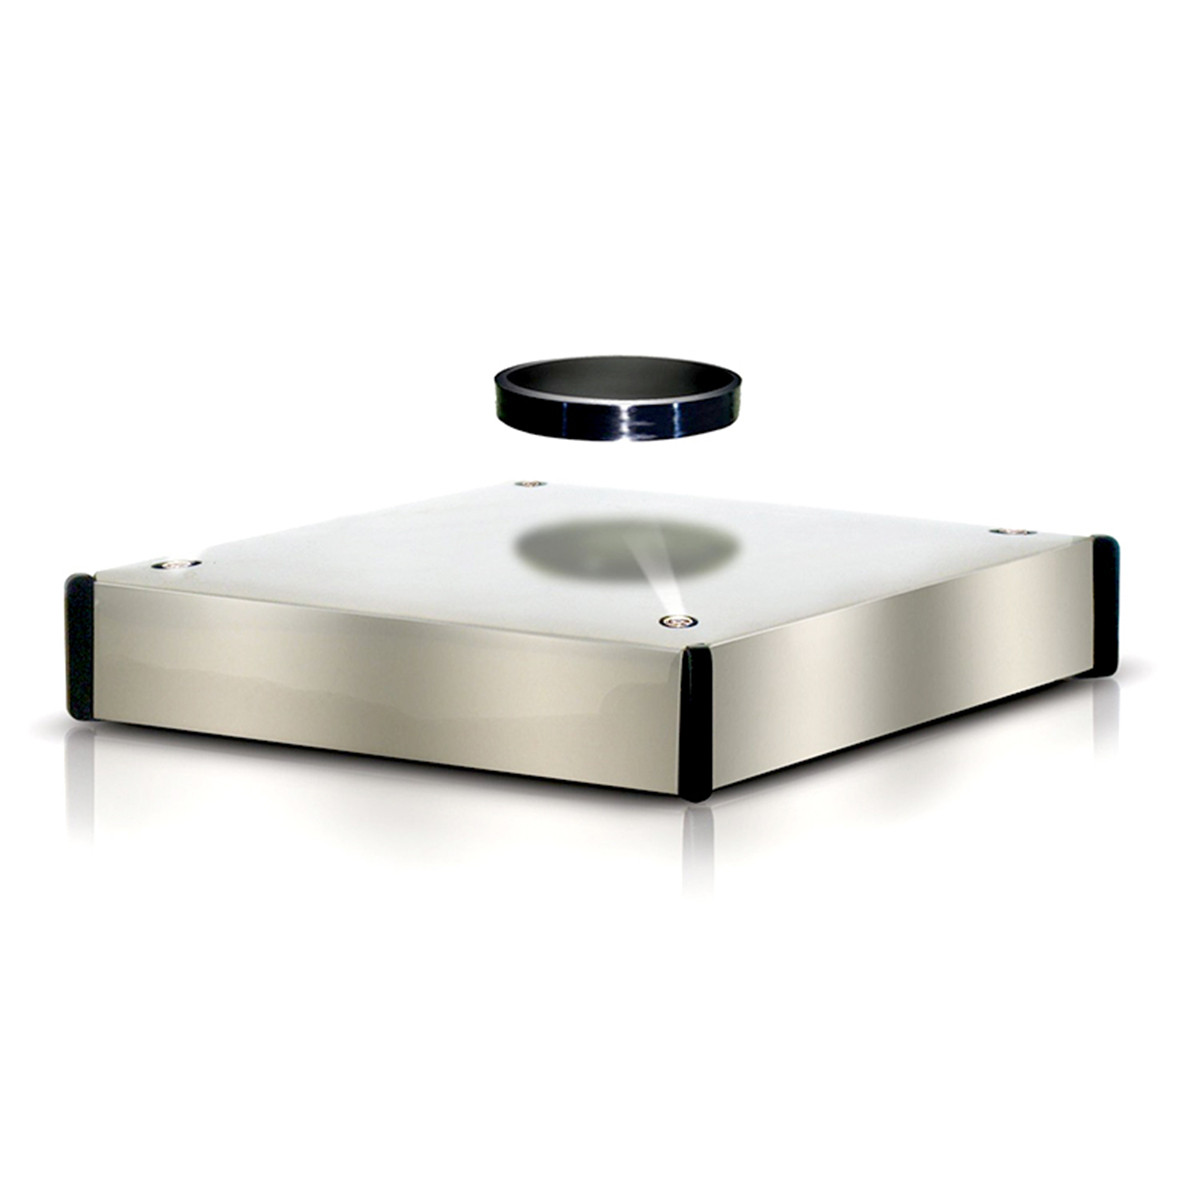 Magnetic-Levitation-Floating-Ion-Revolution-Display-Platform-Tray-with-Ez-Float-Technology-999585-1